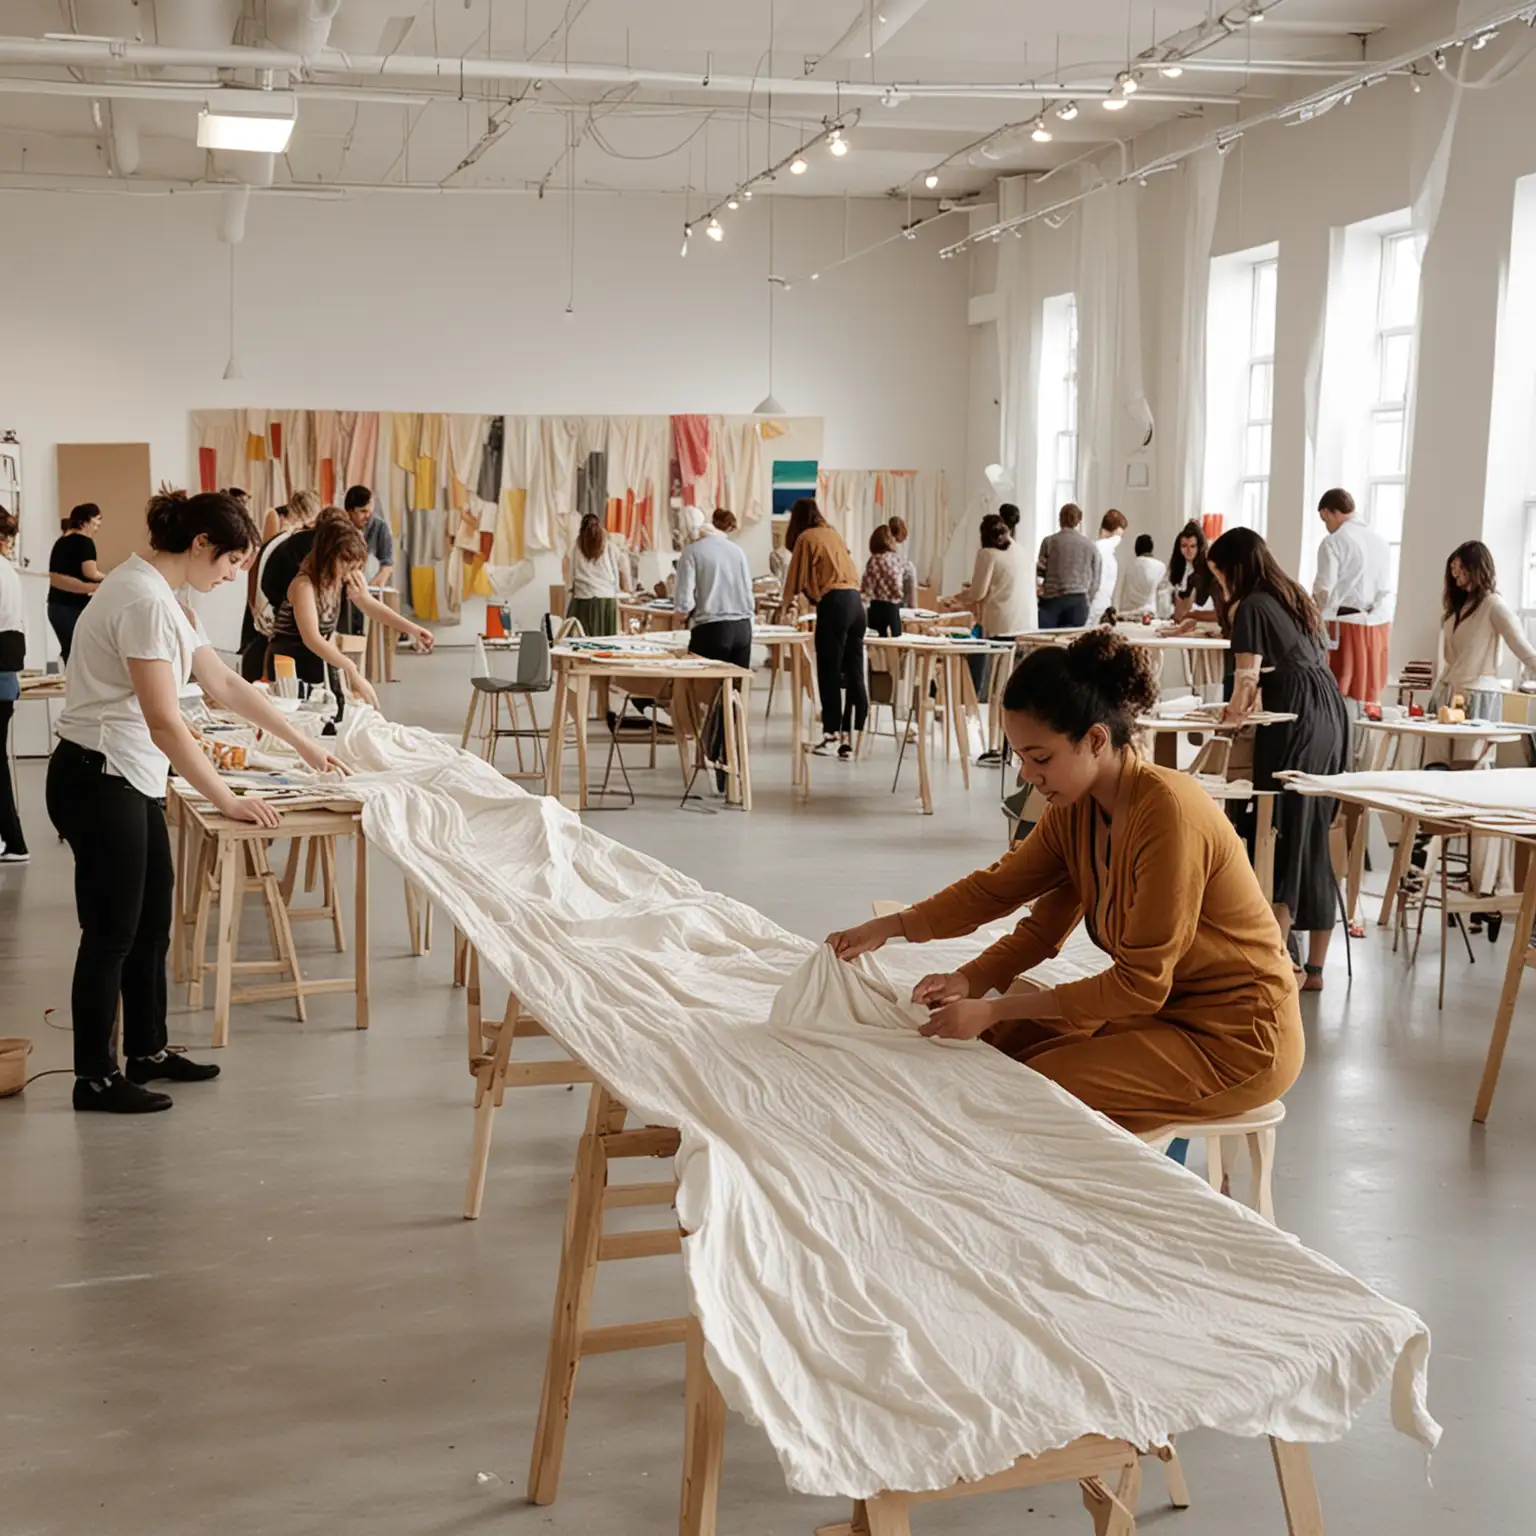 Collaborative Fabric Art Creation in an Art Space